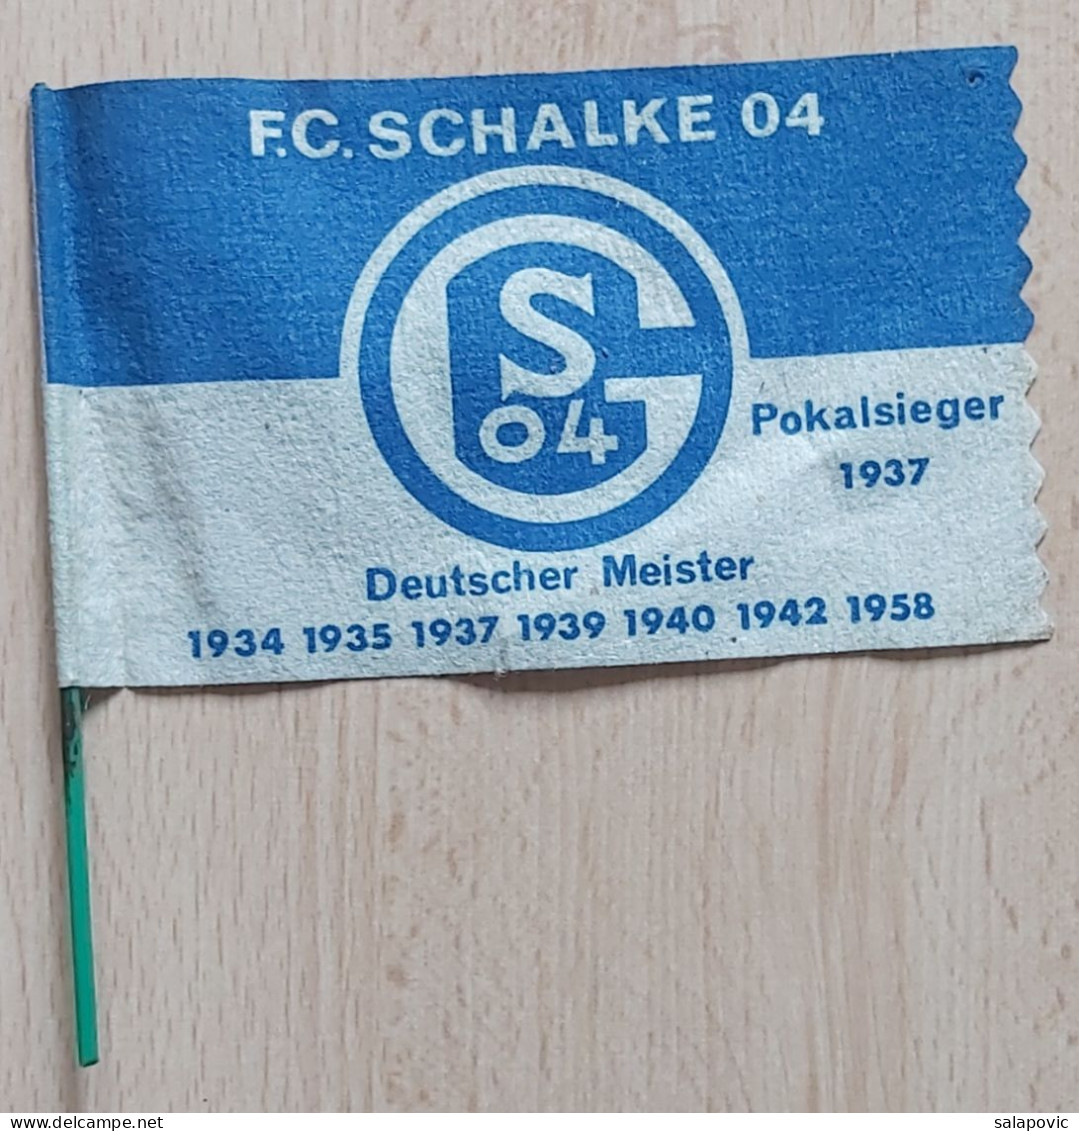 FC Schalke 04 Germany, Football Club Football Fussball Soccer Calcio PENNANT ZS 1 KUT - Bekleidung, Souvenirs Und Sonstige